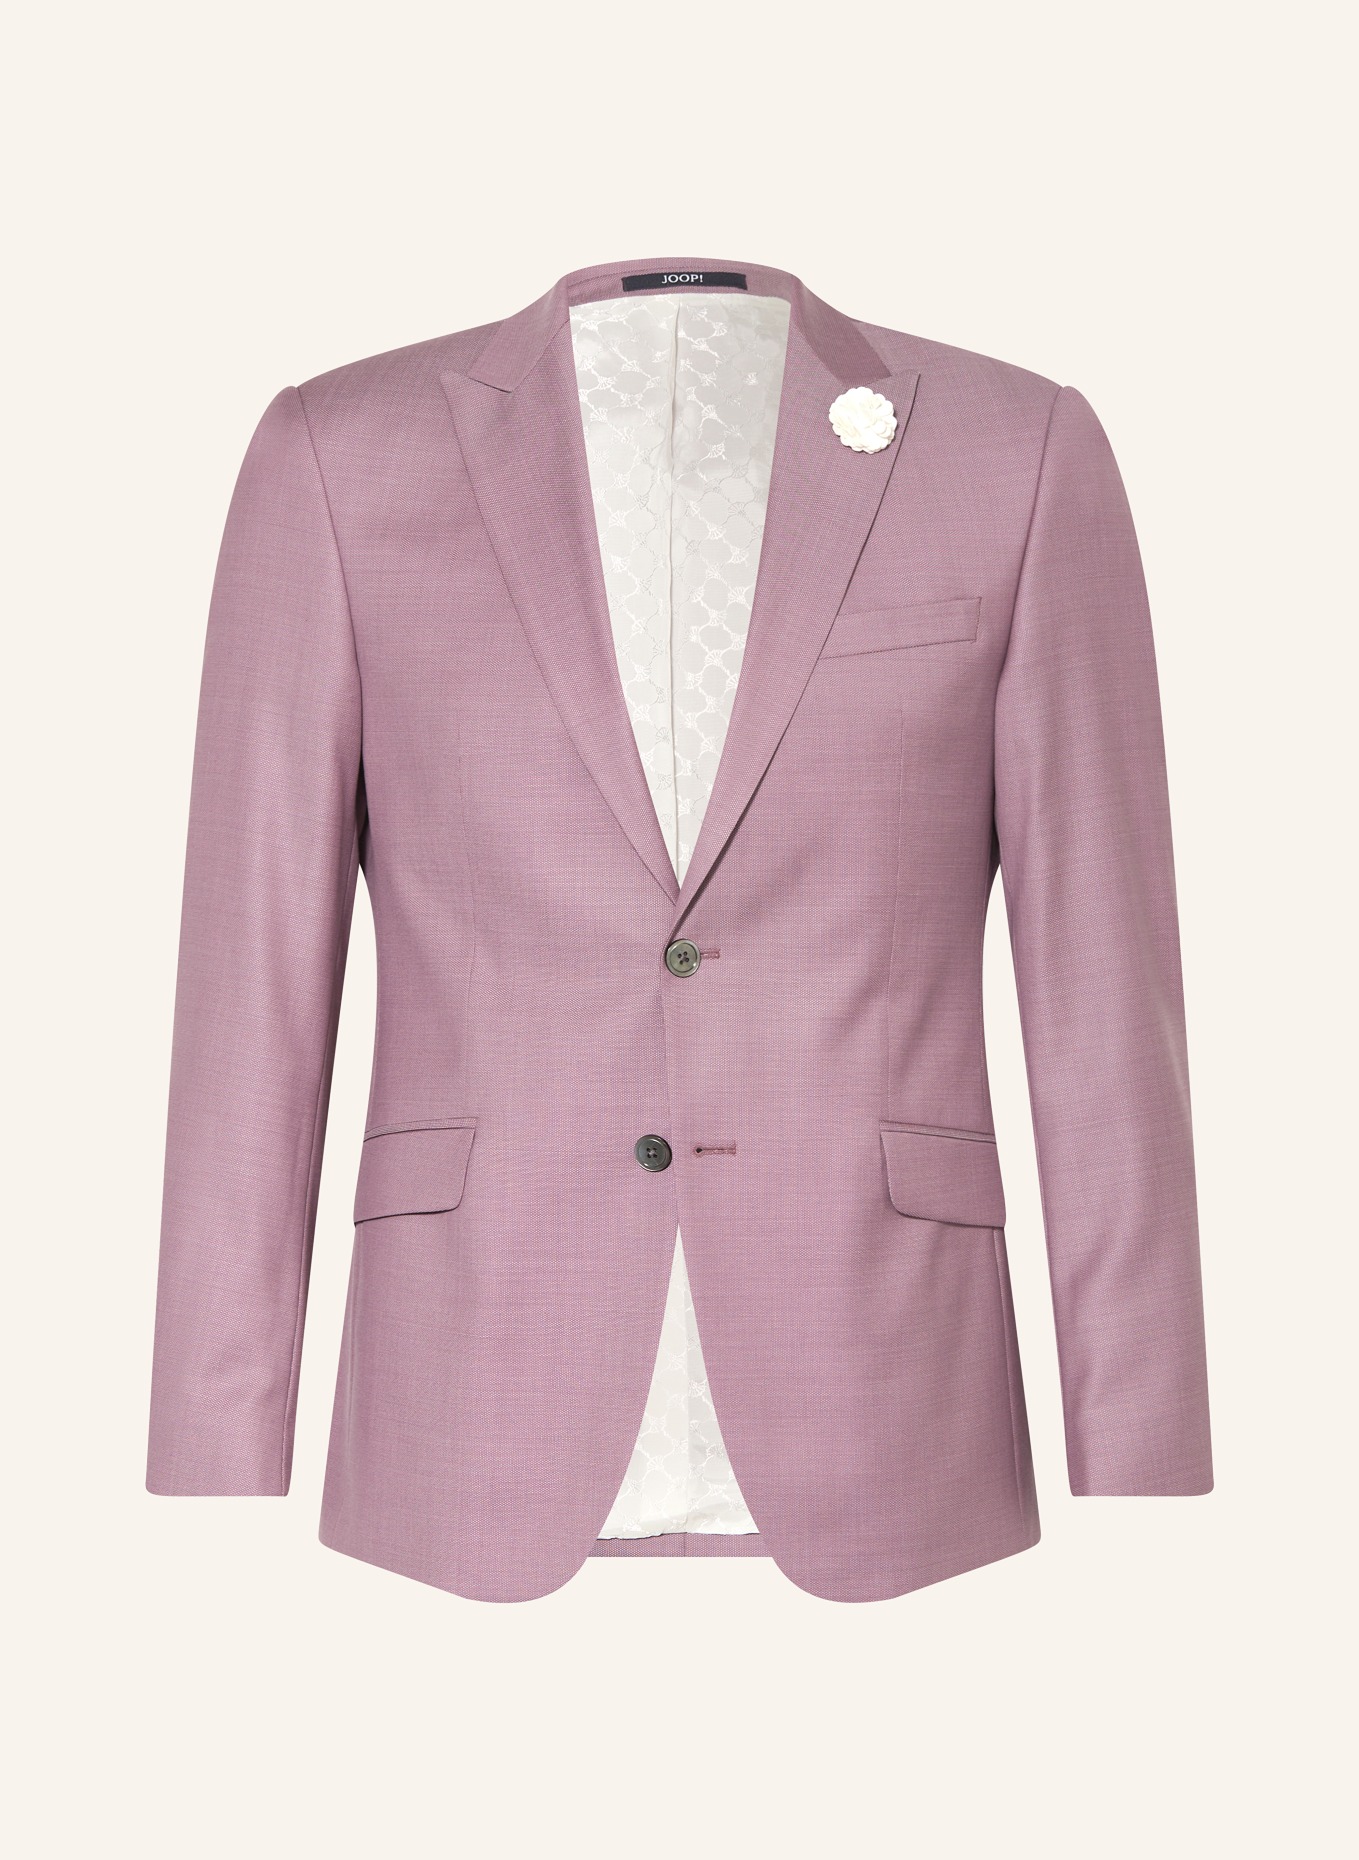 JOOP! Suit jacket HAWKER slim fit, Color: 650 Dark Pink                  650 (Image 1)